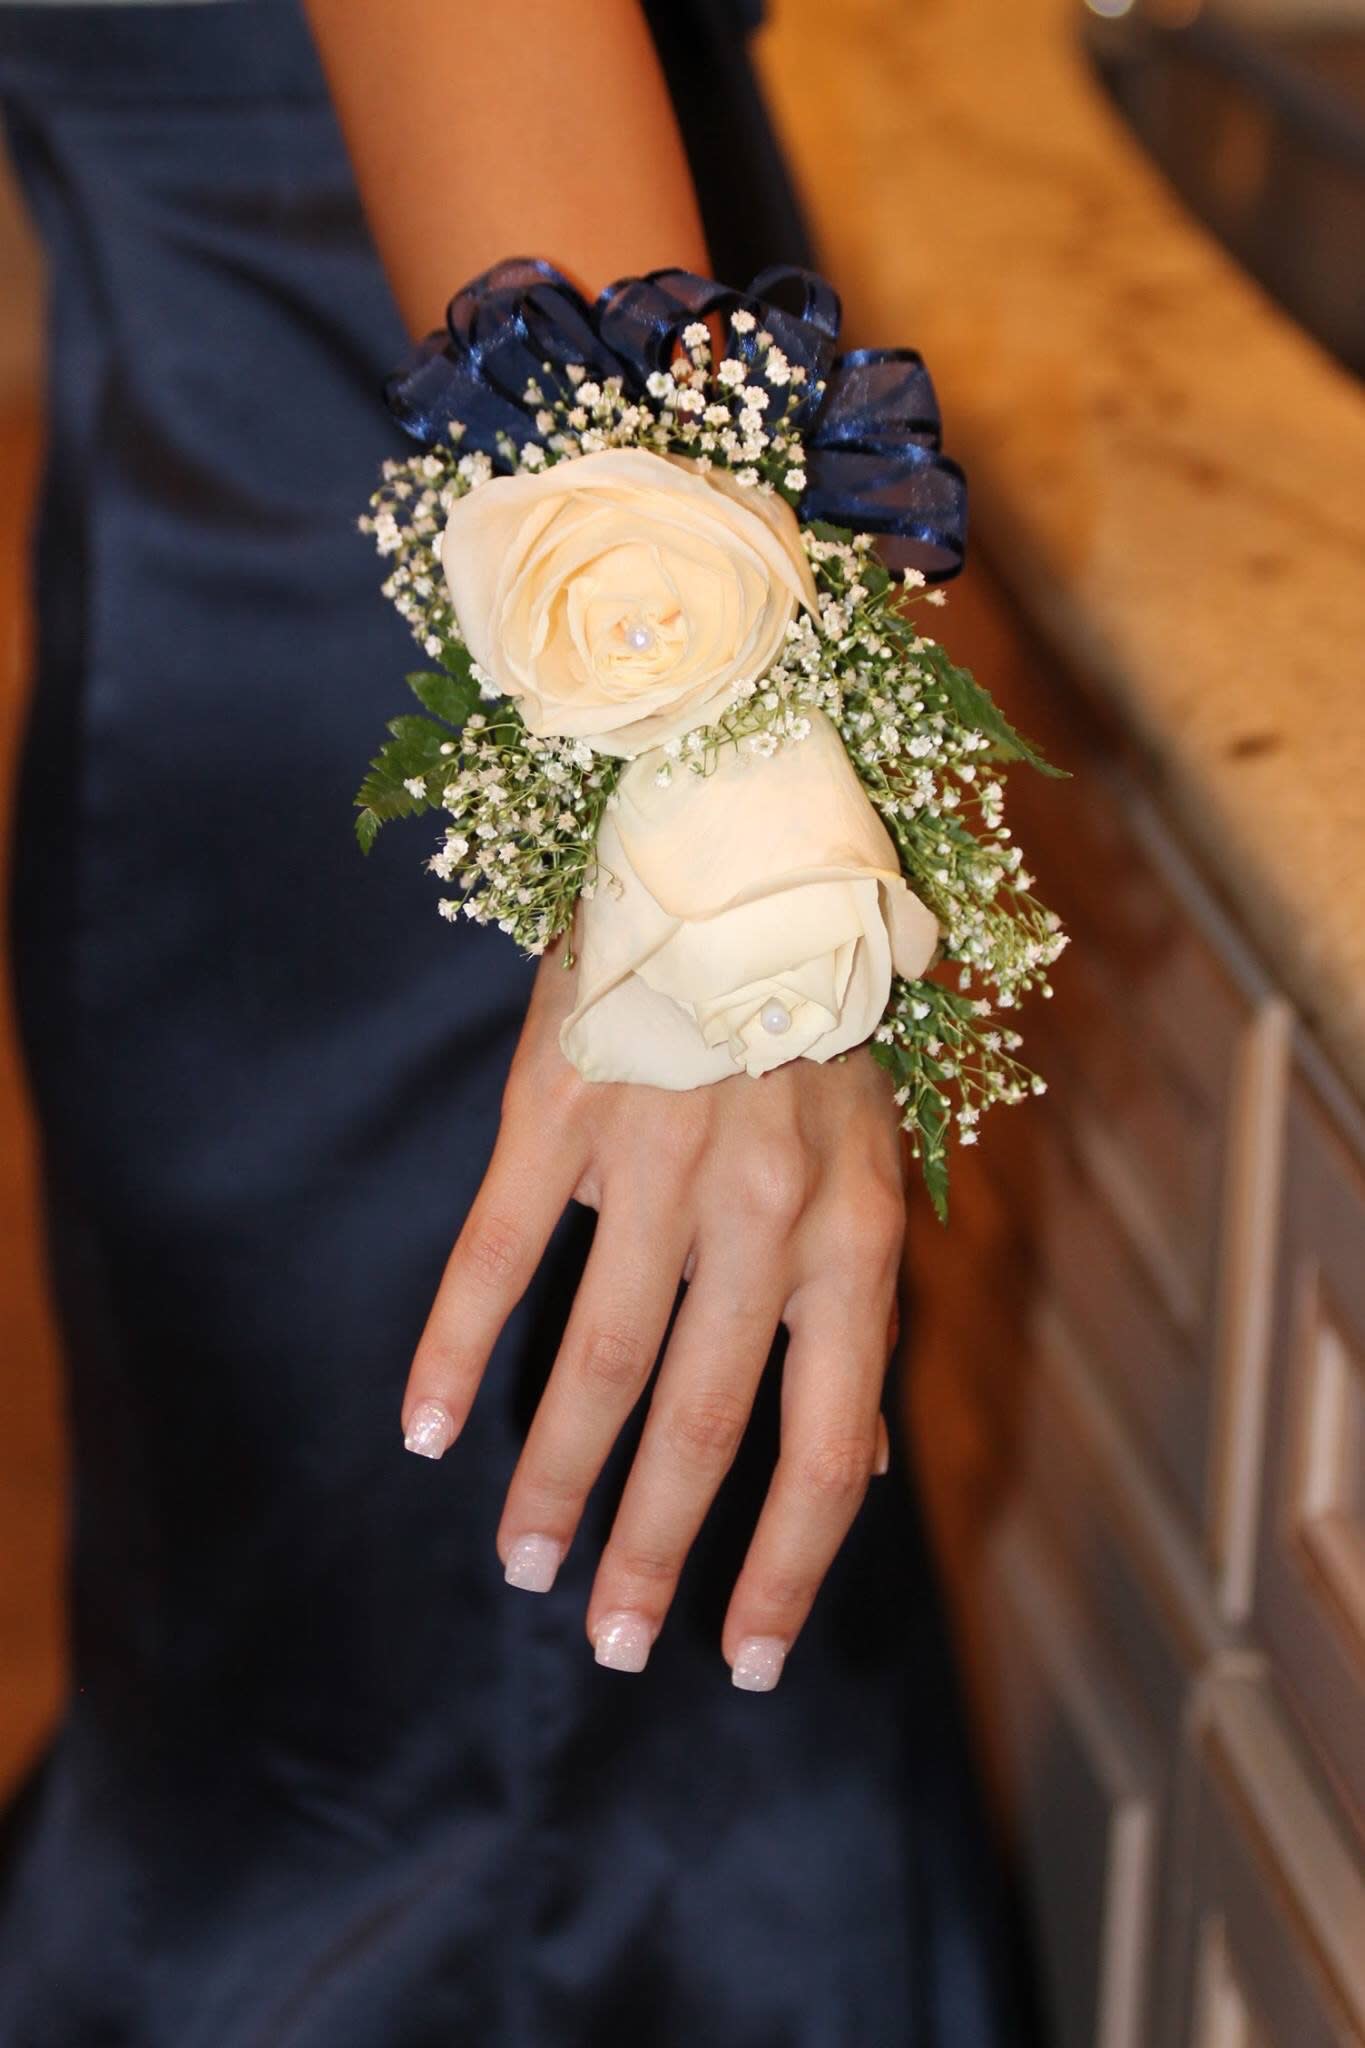 White Rose Wrist Corsage Stock Image Of Couple 7112811